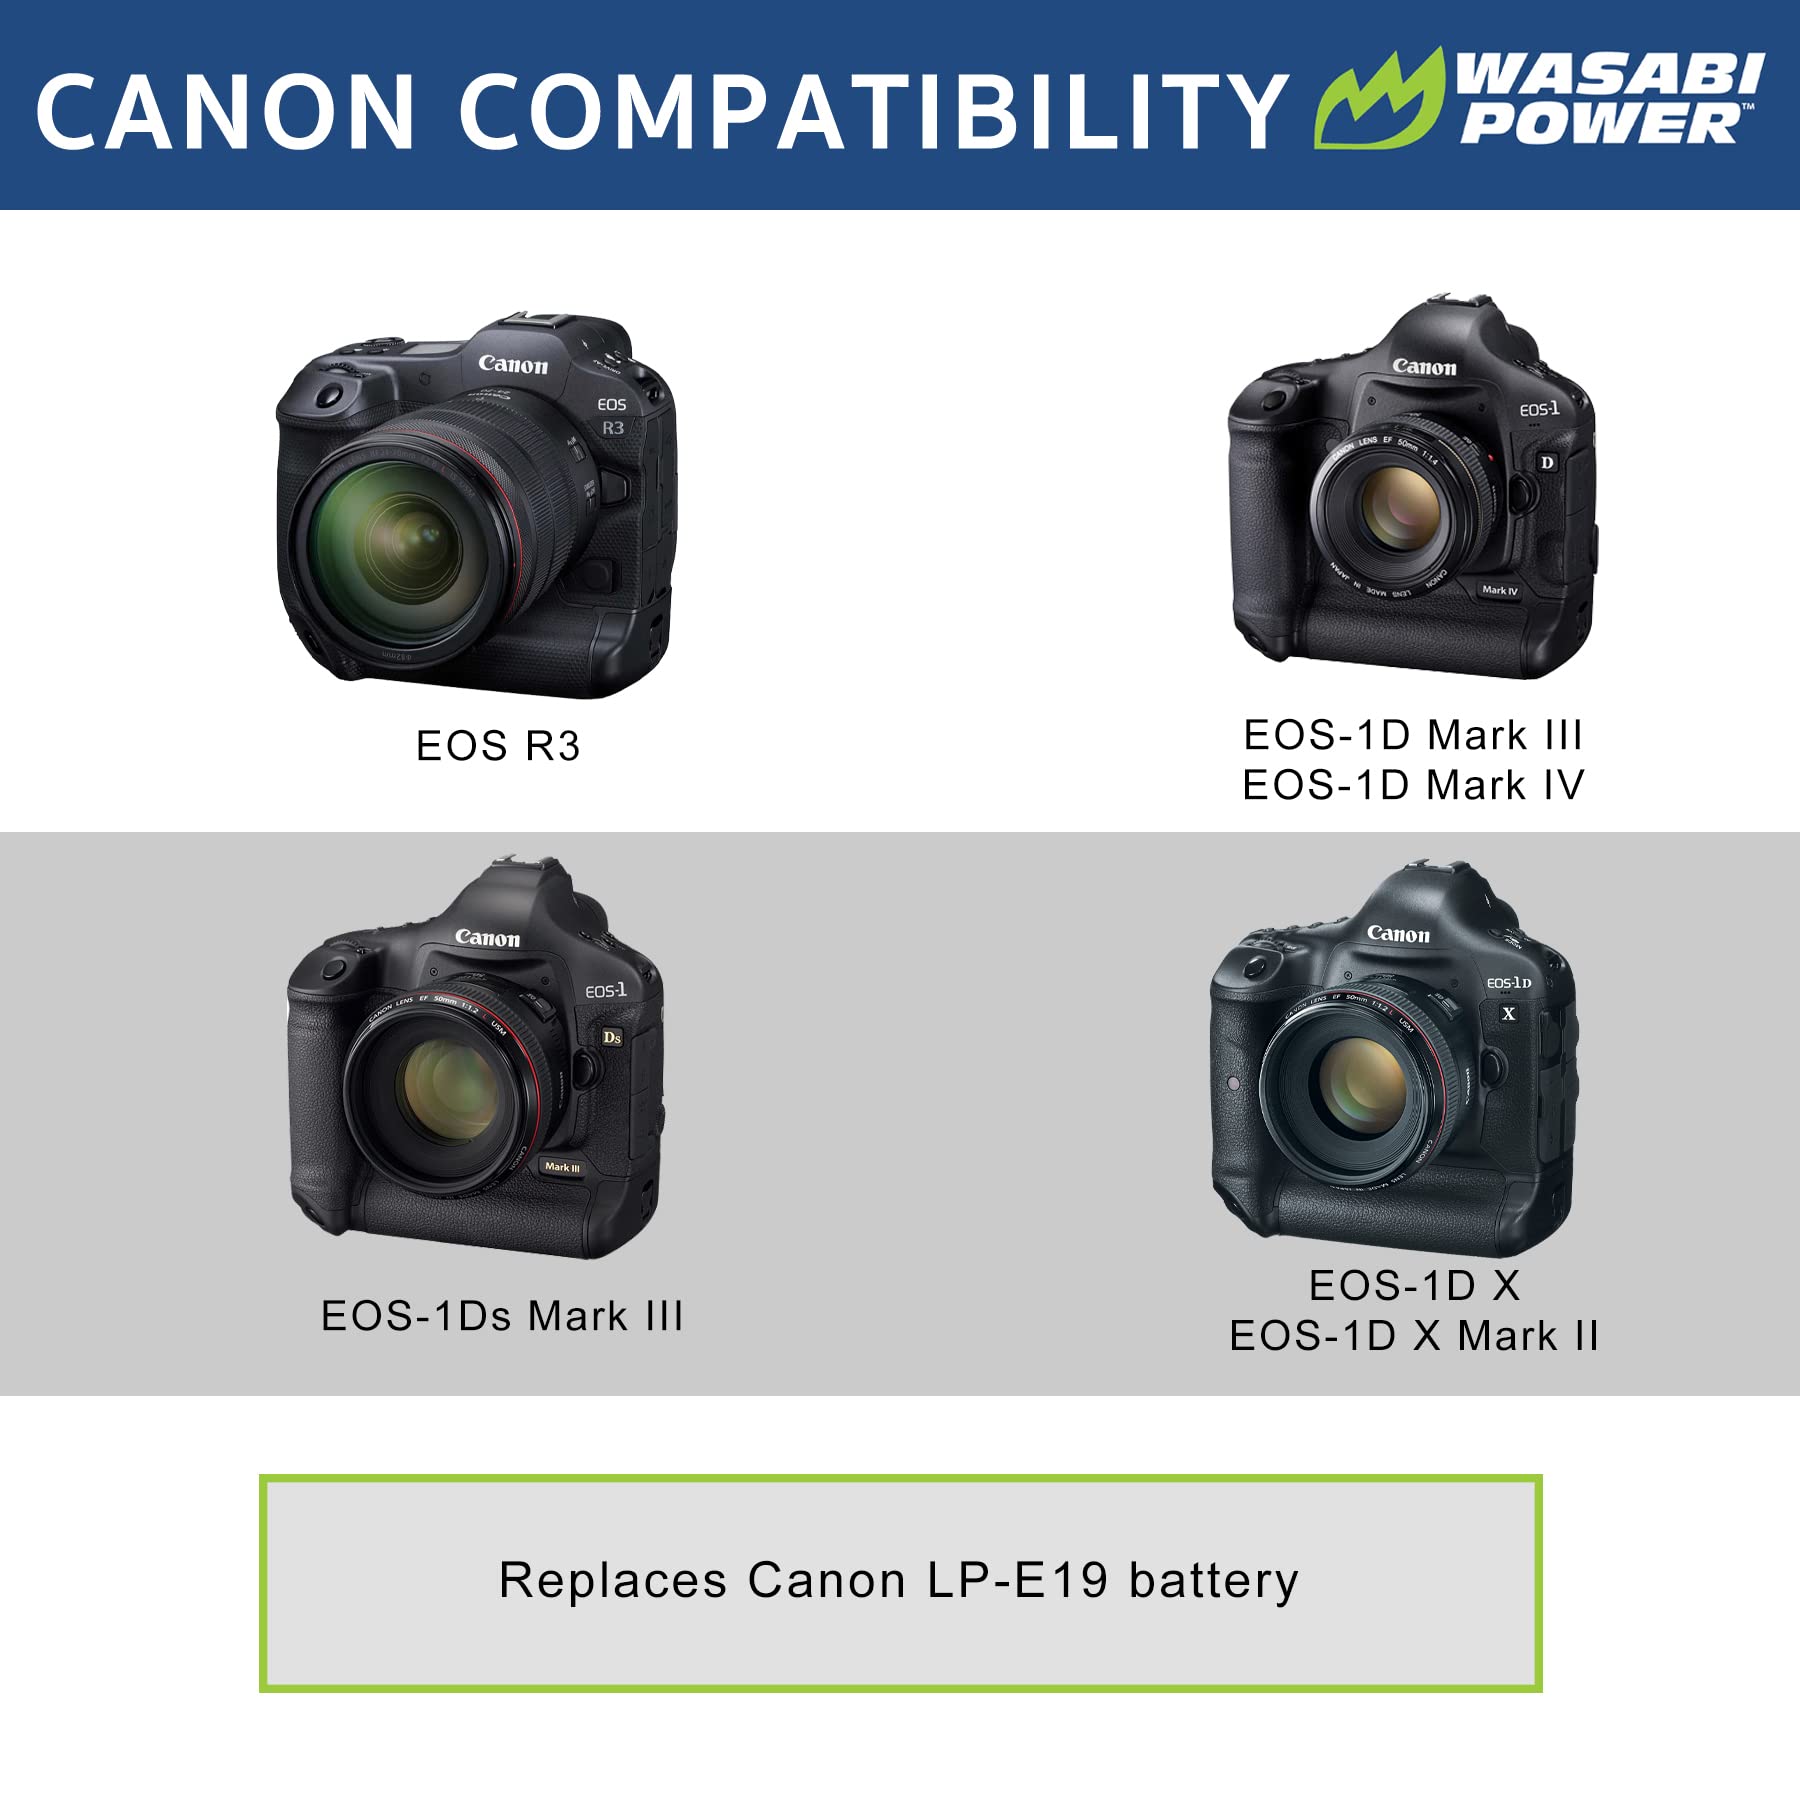 DSTE Replacement for LP-E4N Li-ion Battery Compatible Canon EOS-1D X EOS-1D  X Mark II EOS-1D Mark III EOS-1D Mark IV EOS-1Ds Mark III as LP-E19